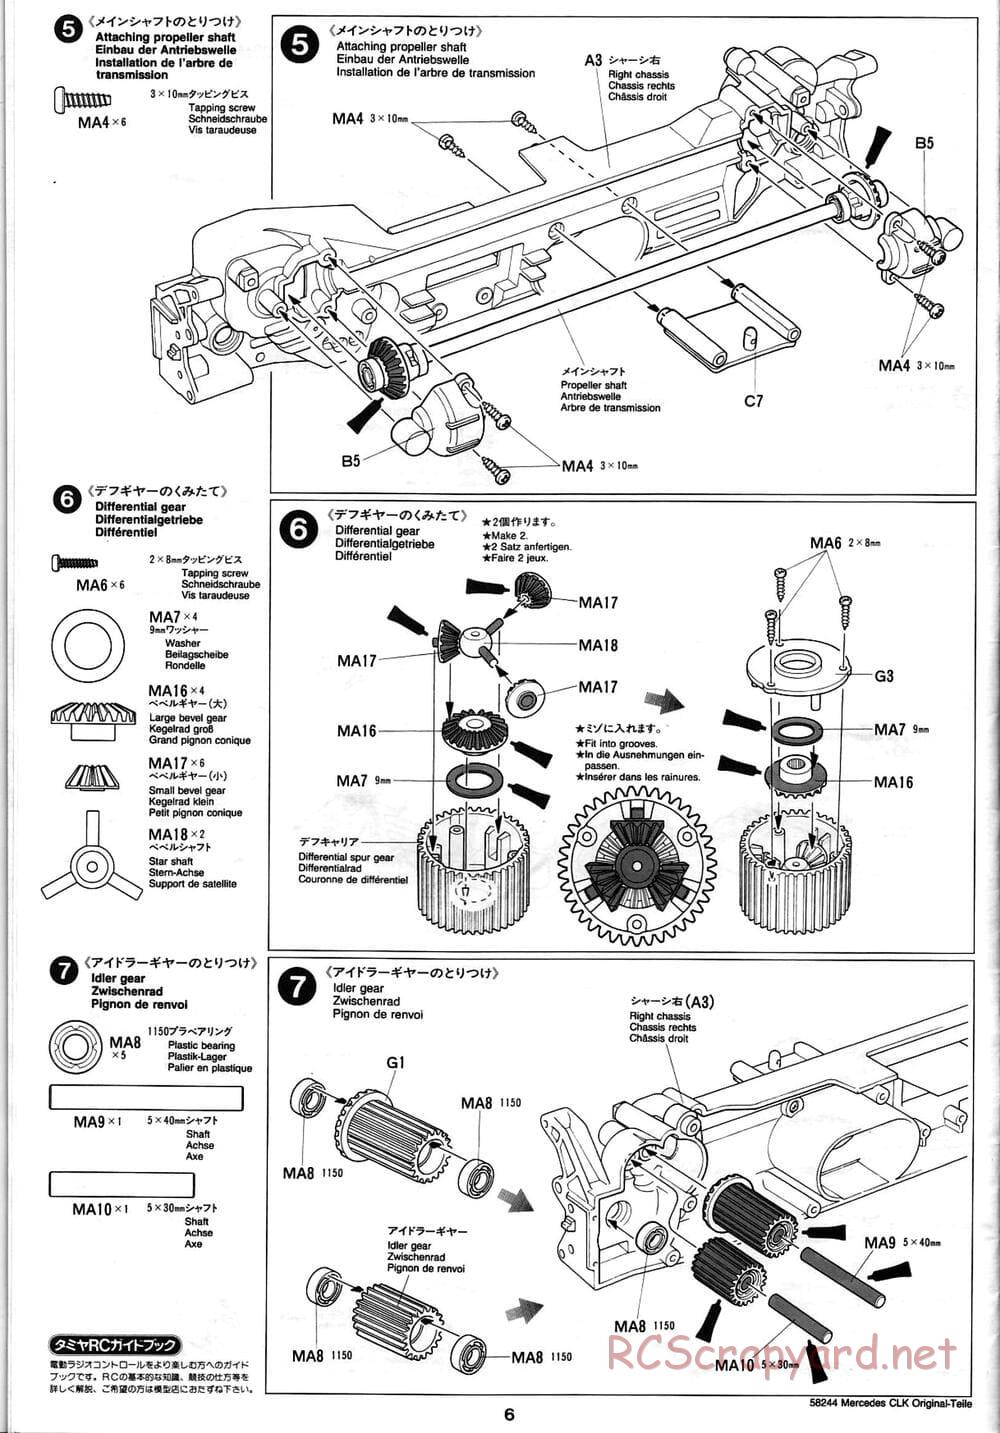 Tamiya - Mercedes CLK-GTR Original-Teile - TL-01 Chassis - Manual - Page 6